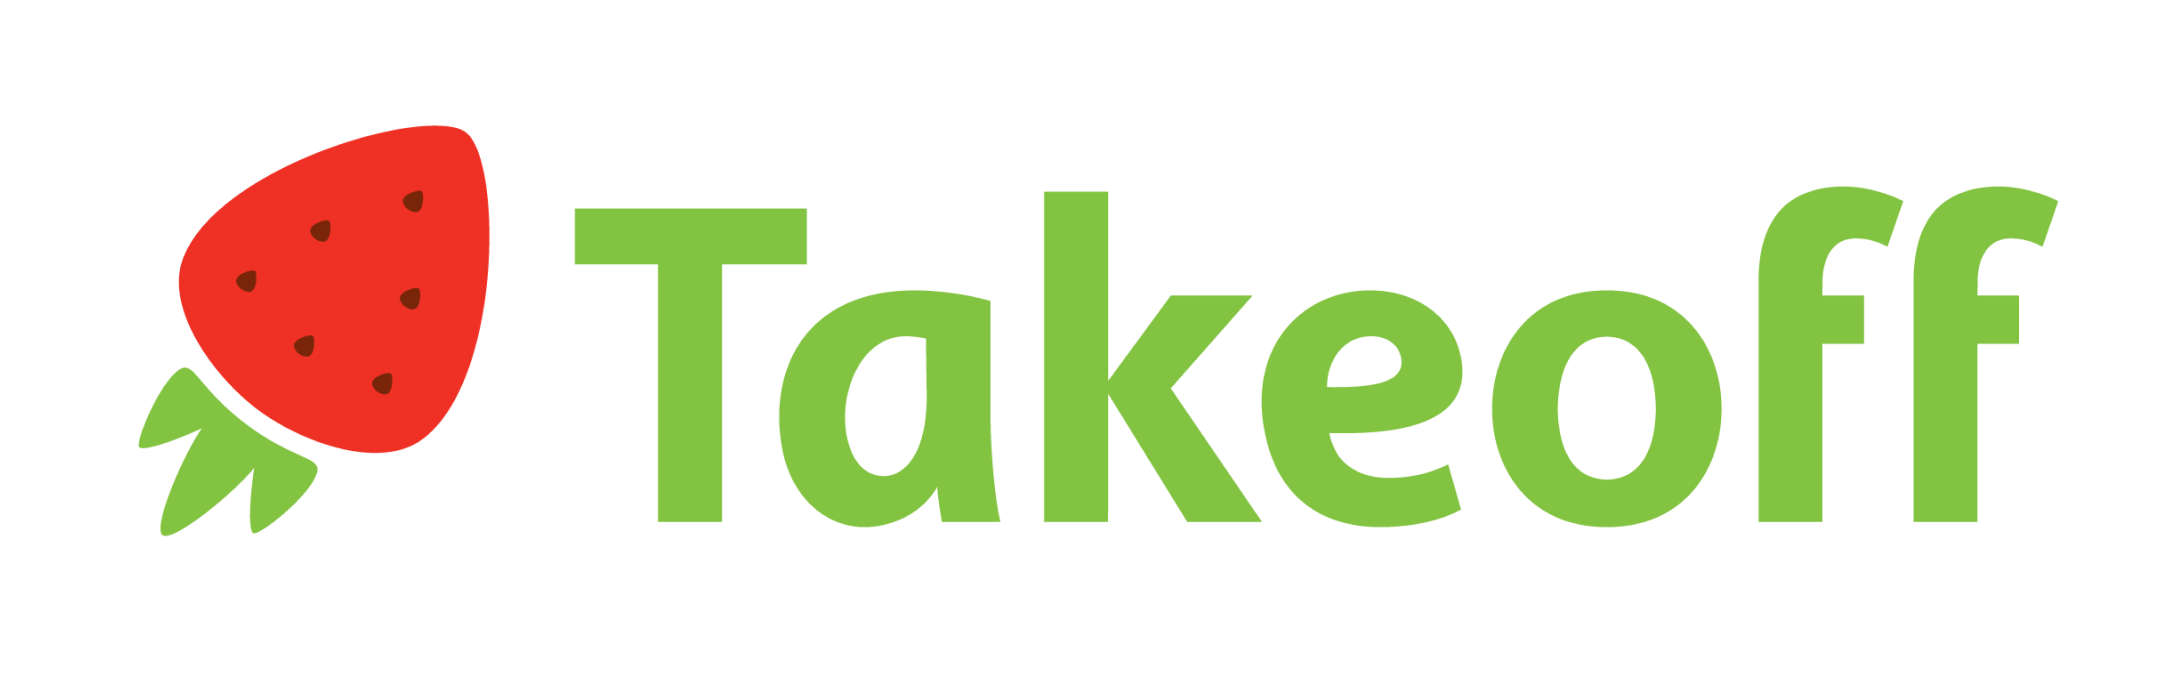 TakeOff logo